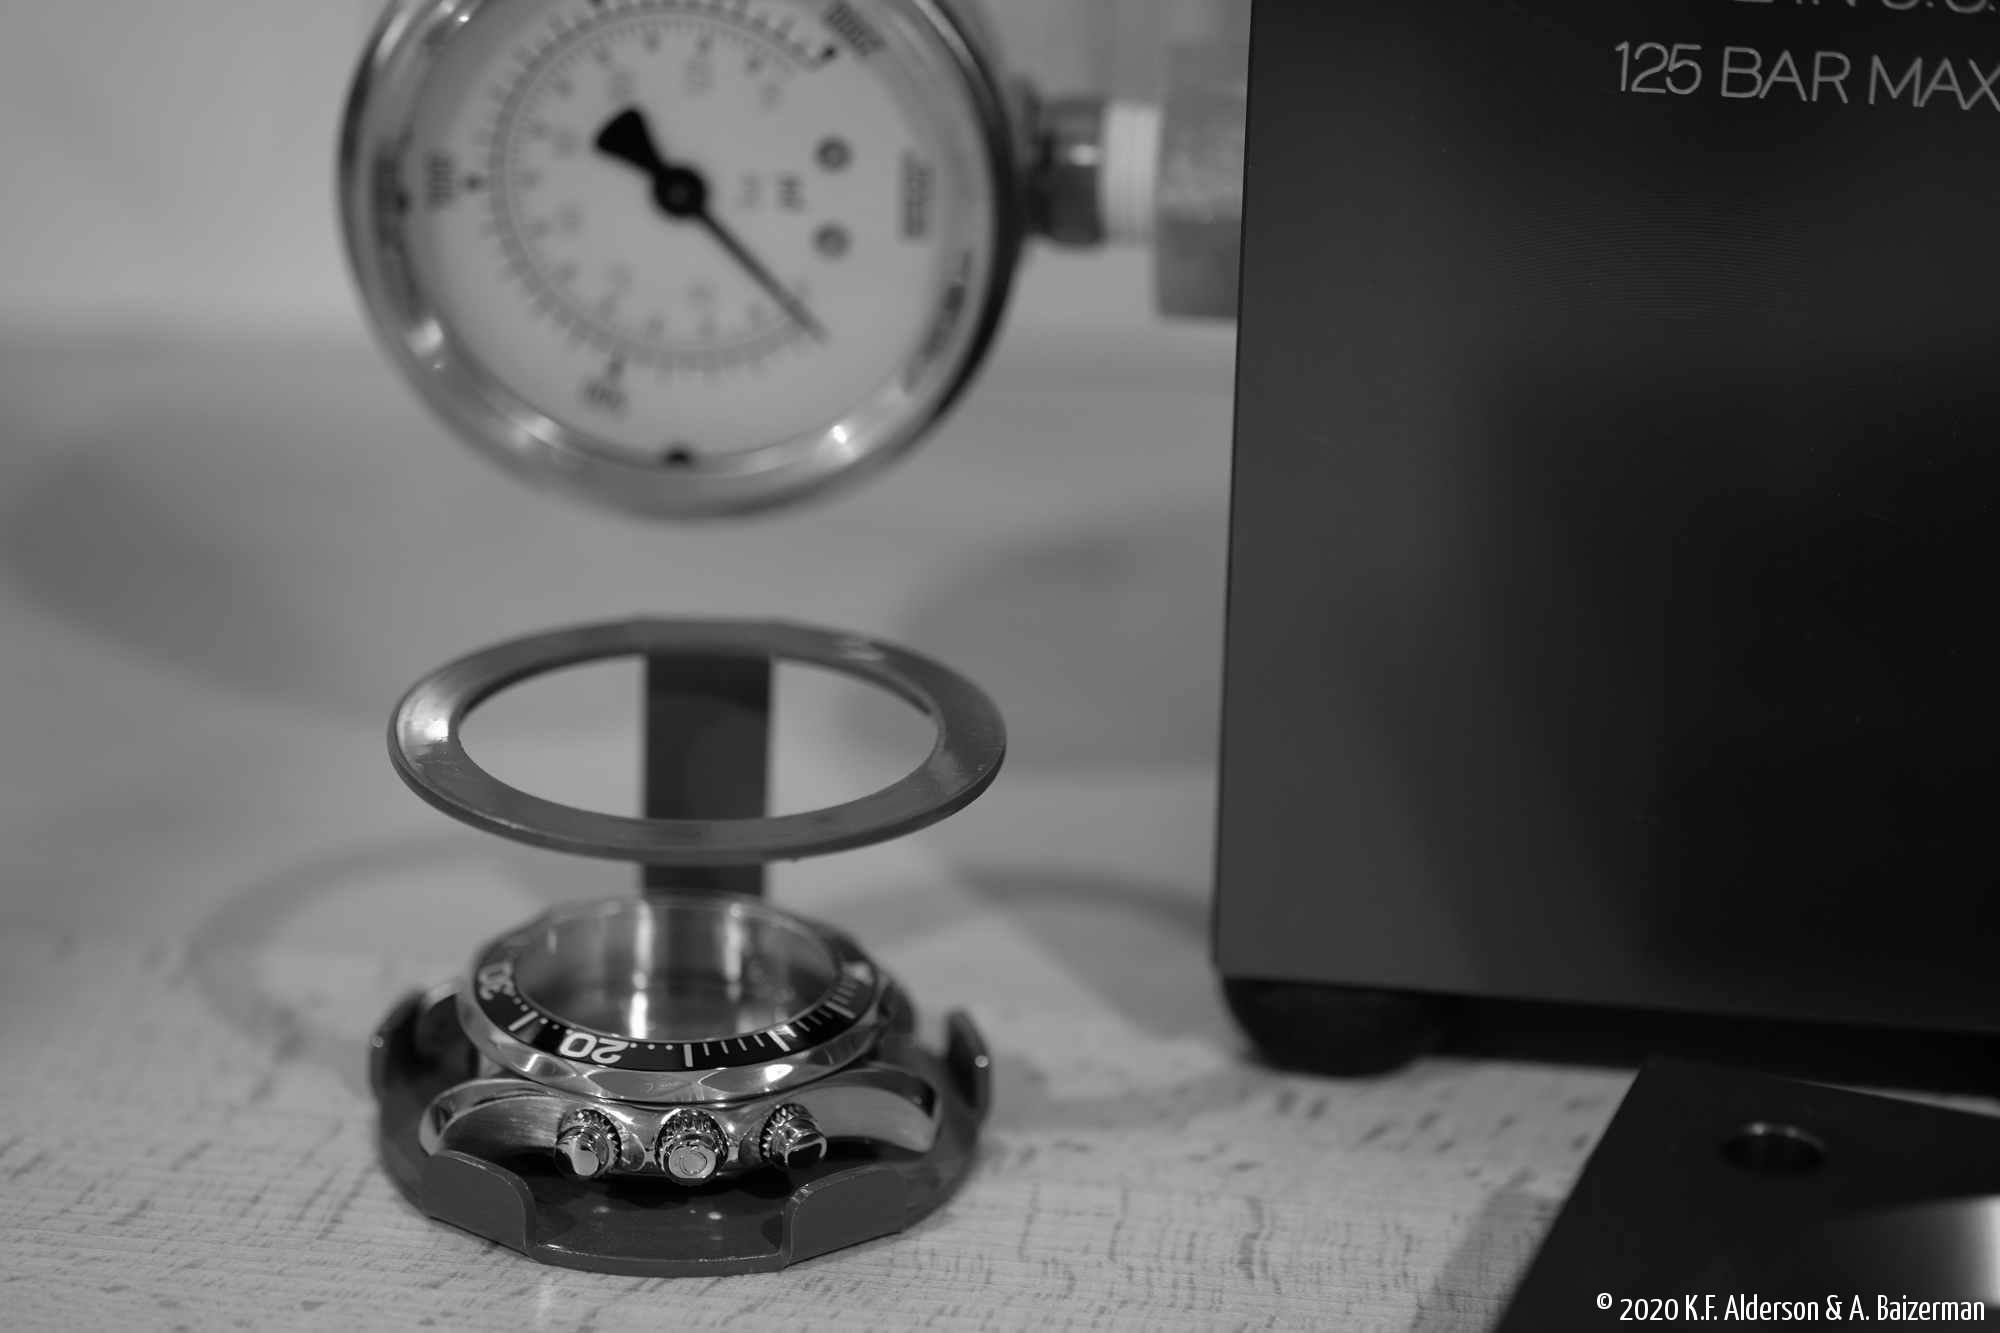 Watch and water testing machine